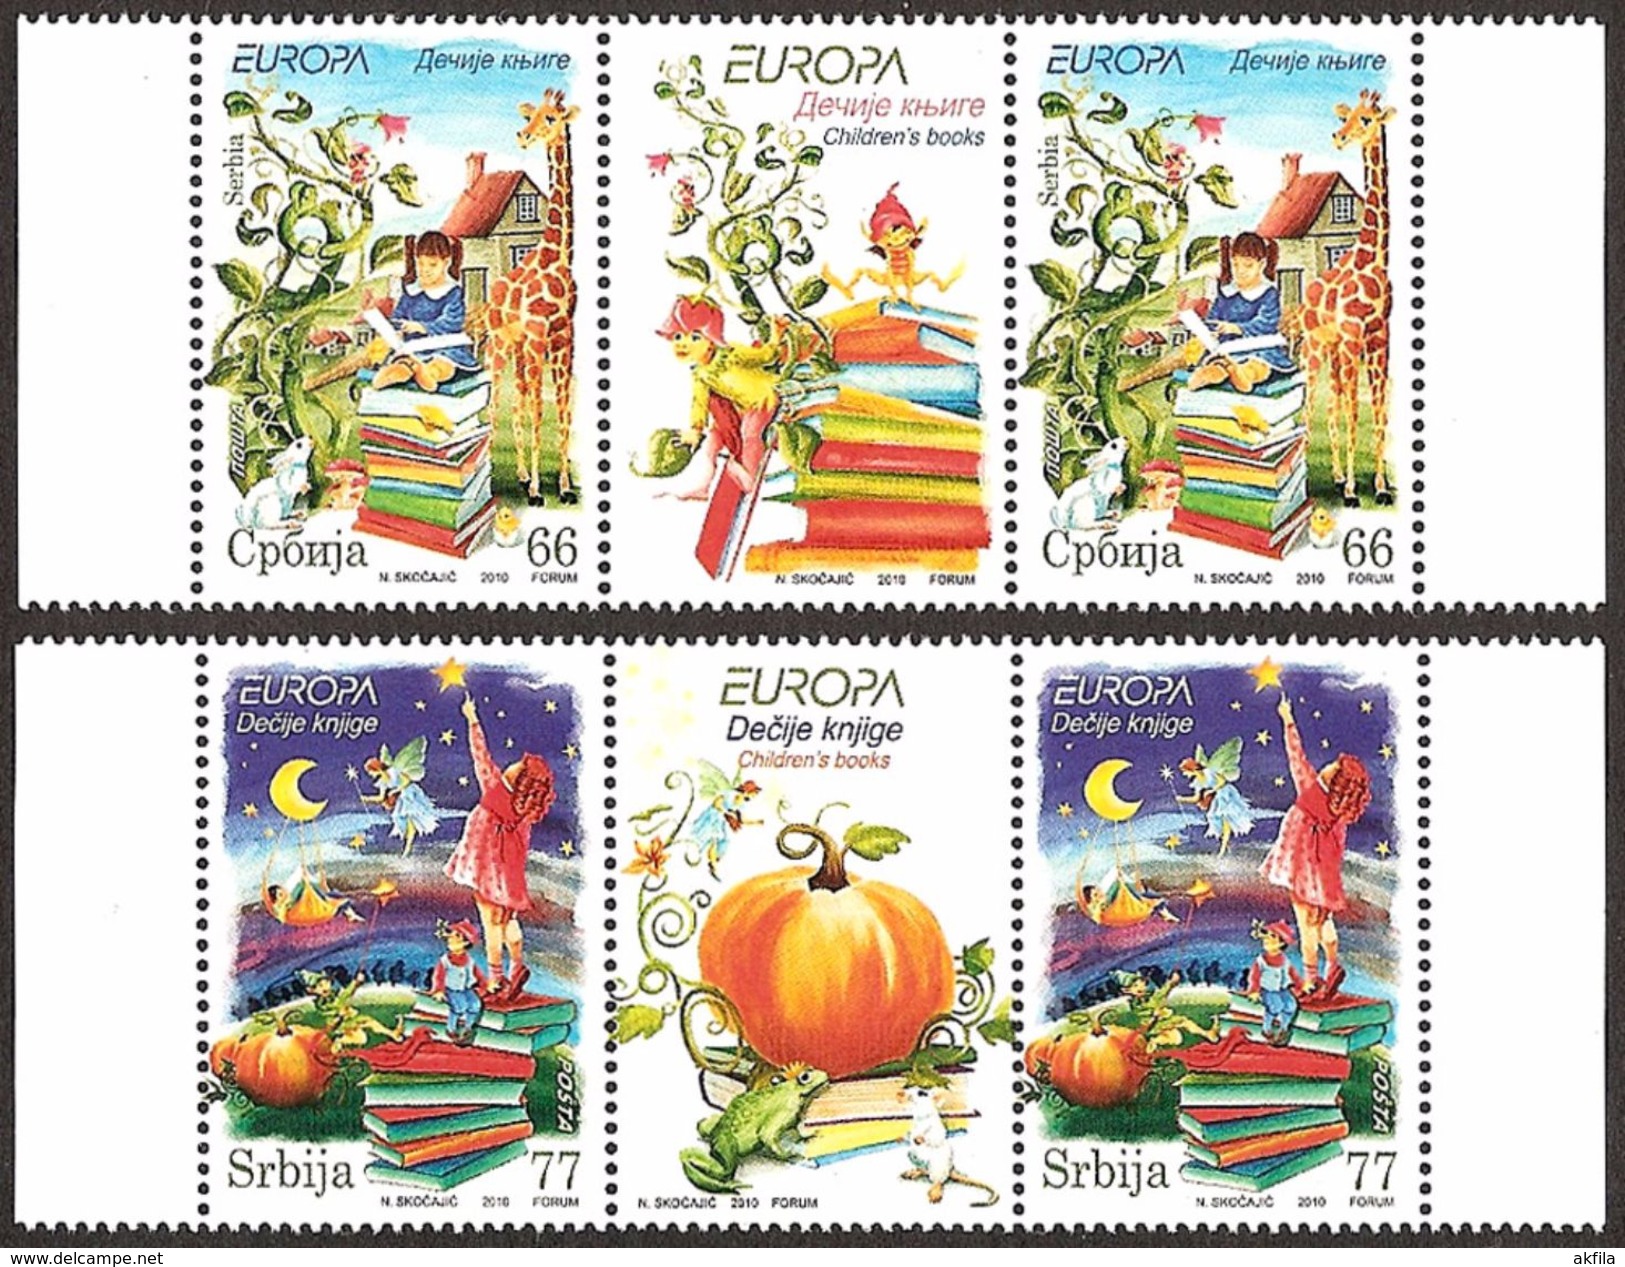 Serbia 2010 EUROPA - Children's Books, Stamp-vignette-stamp, MNH (**) Michel 352-353 - Serbia